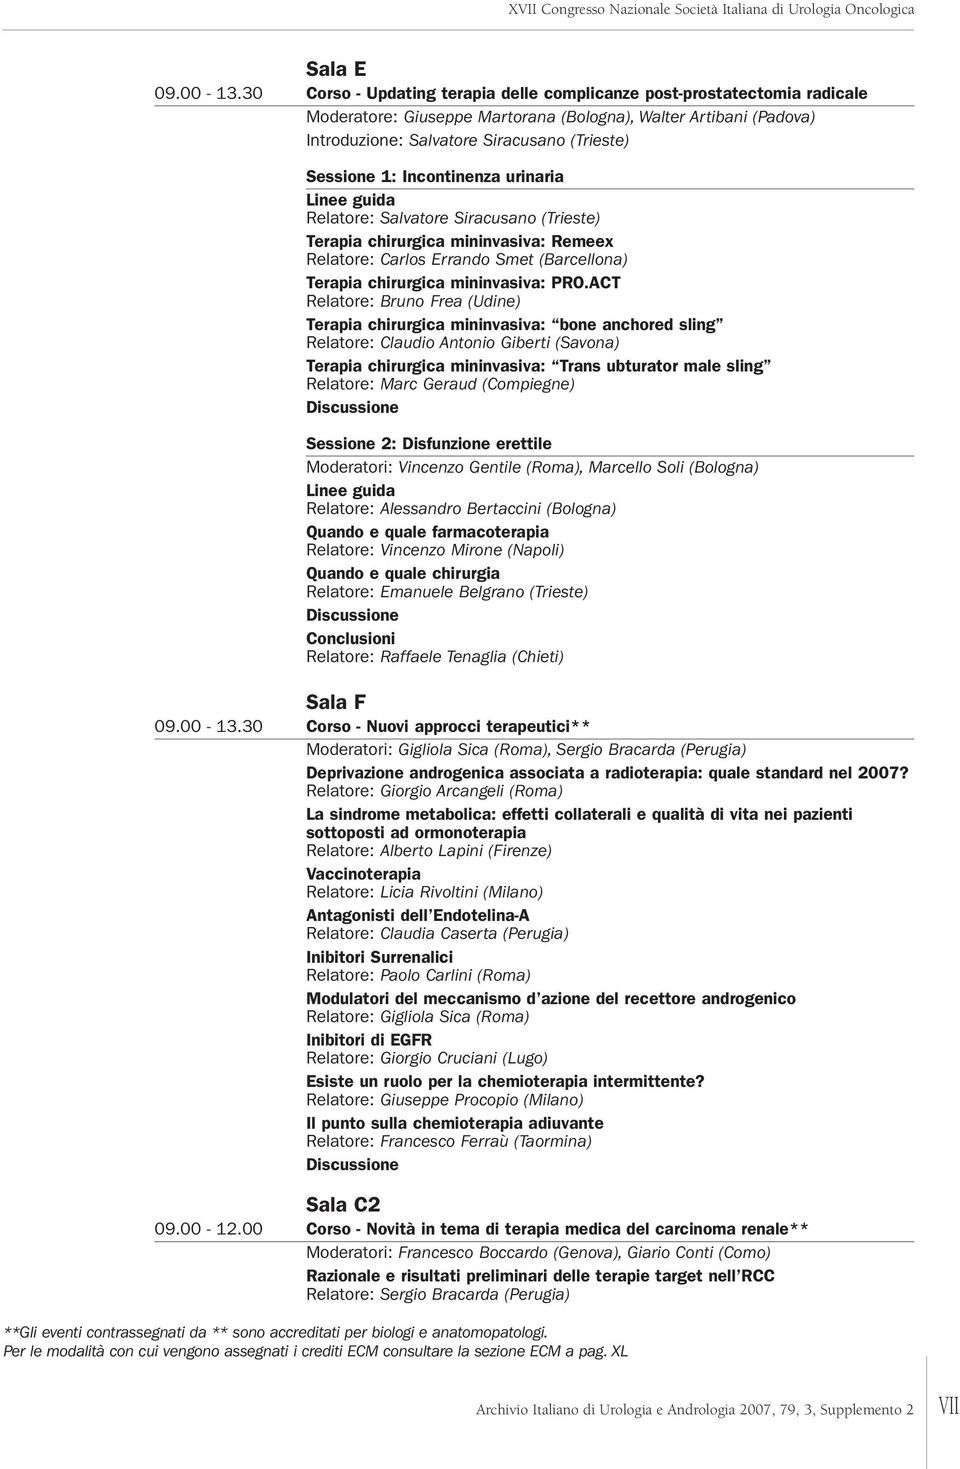 Incontinenza urinaria Linee guida Relatore: Salvatore Siracusano (Trieste) Terapia chirurgica mininvasiva: Remeex Relatore: Carlos Errando Smet (Barcellona) Terapia chirurgica mininvasiva: PRO.